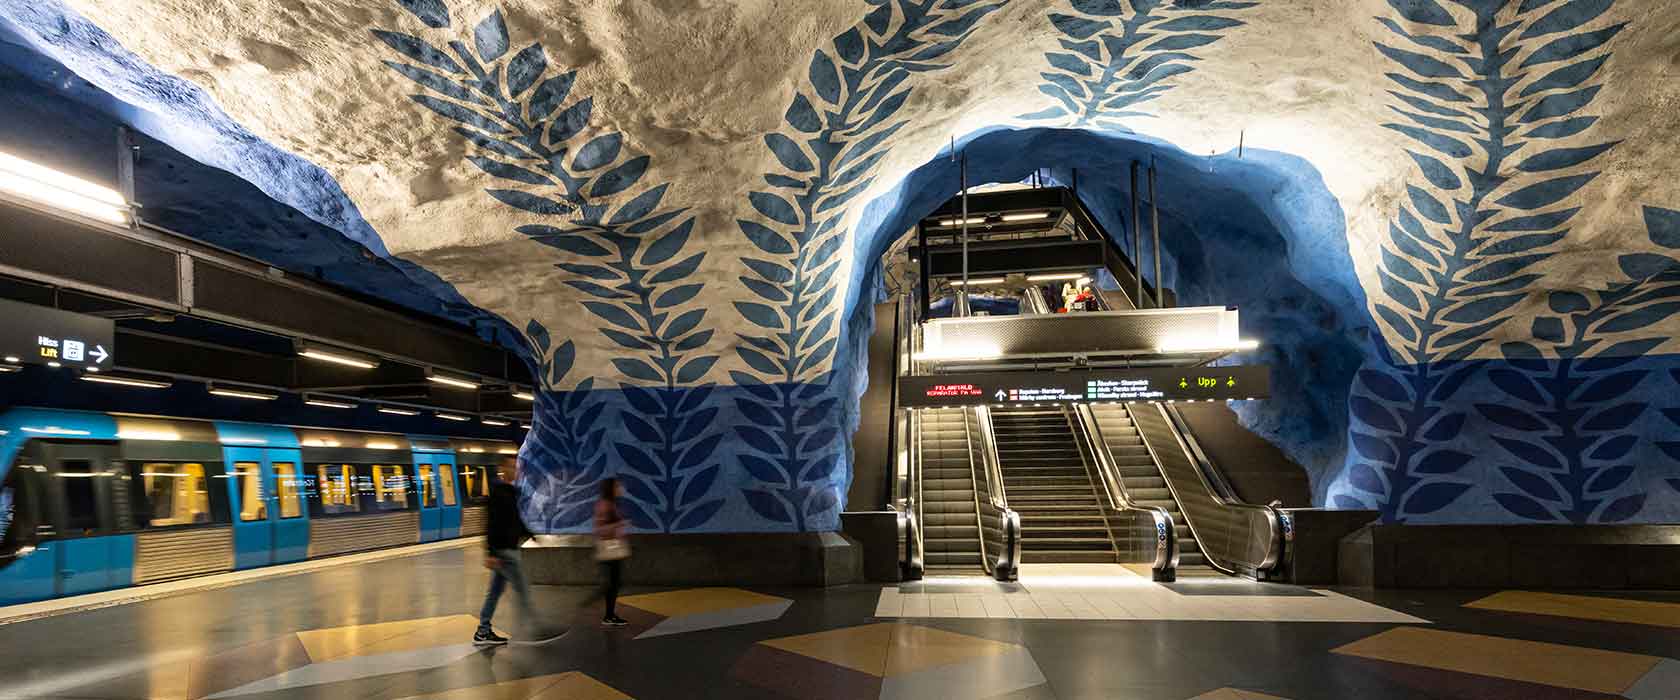 Den blå metrolinje i Stockholm